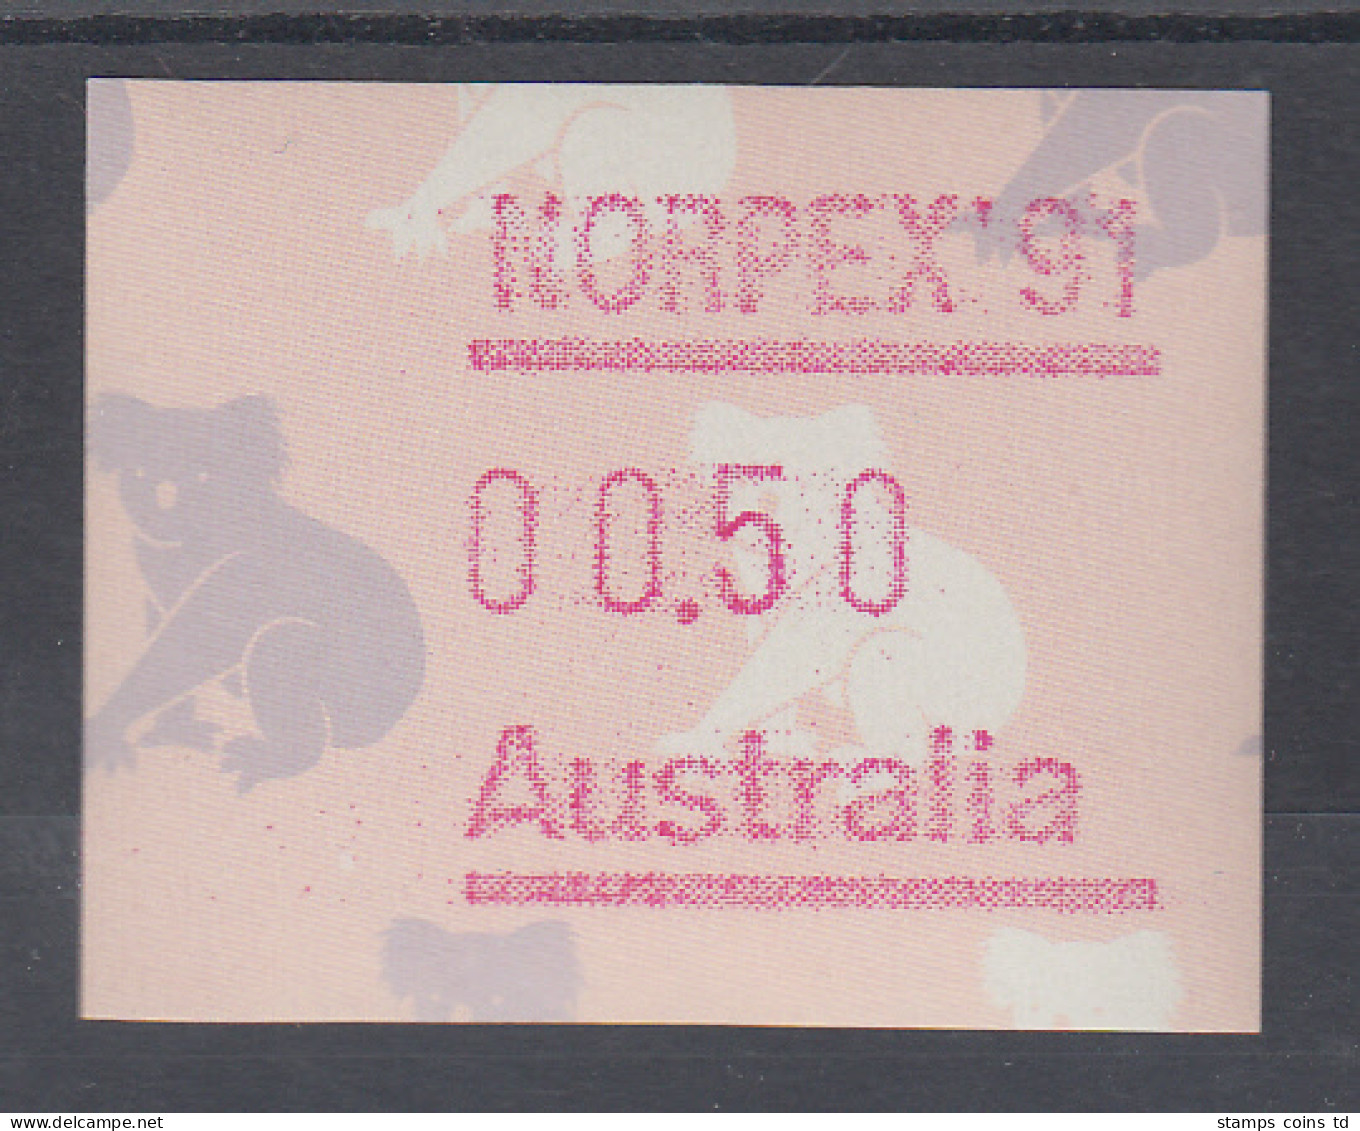 Australien Frama-ATM Koala, Sonderausgabe NORPEX `91 ** - Machine Labels [ATM]